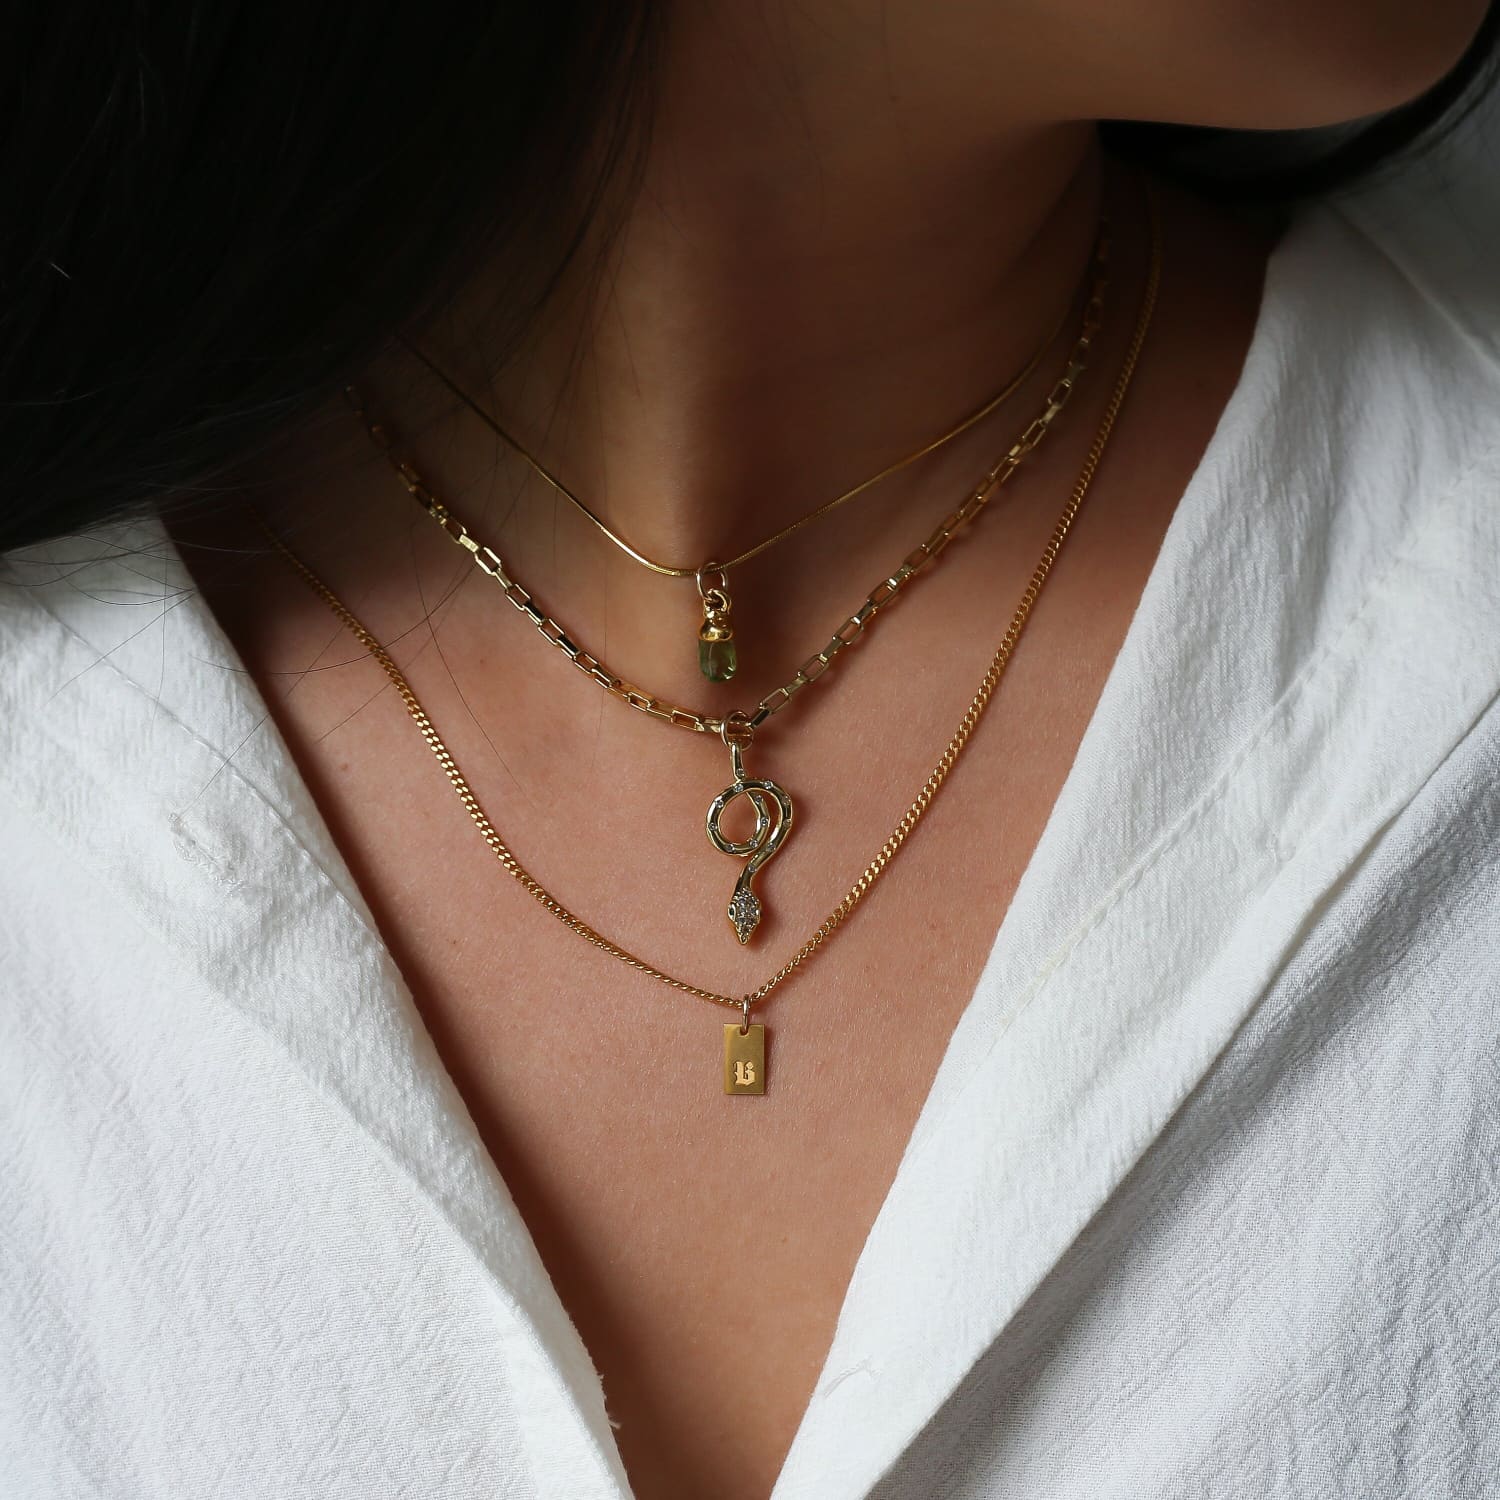 Snake Choker Necklace • 24k Gold Filled Chain • Dainty •